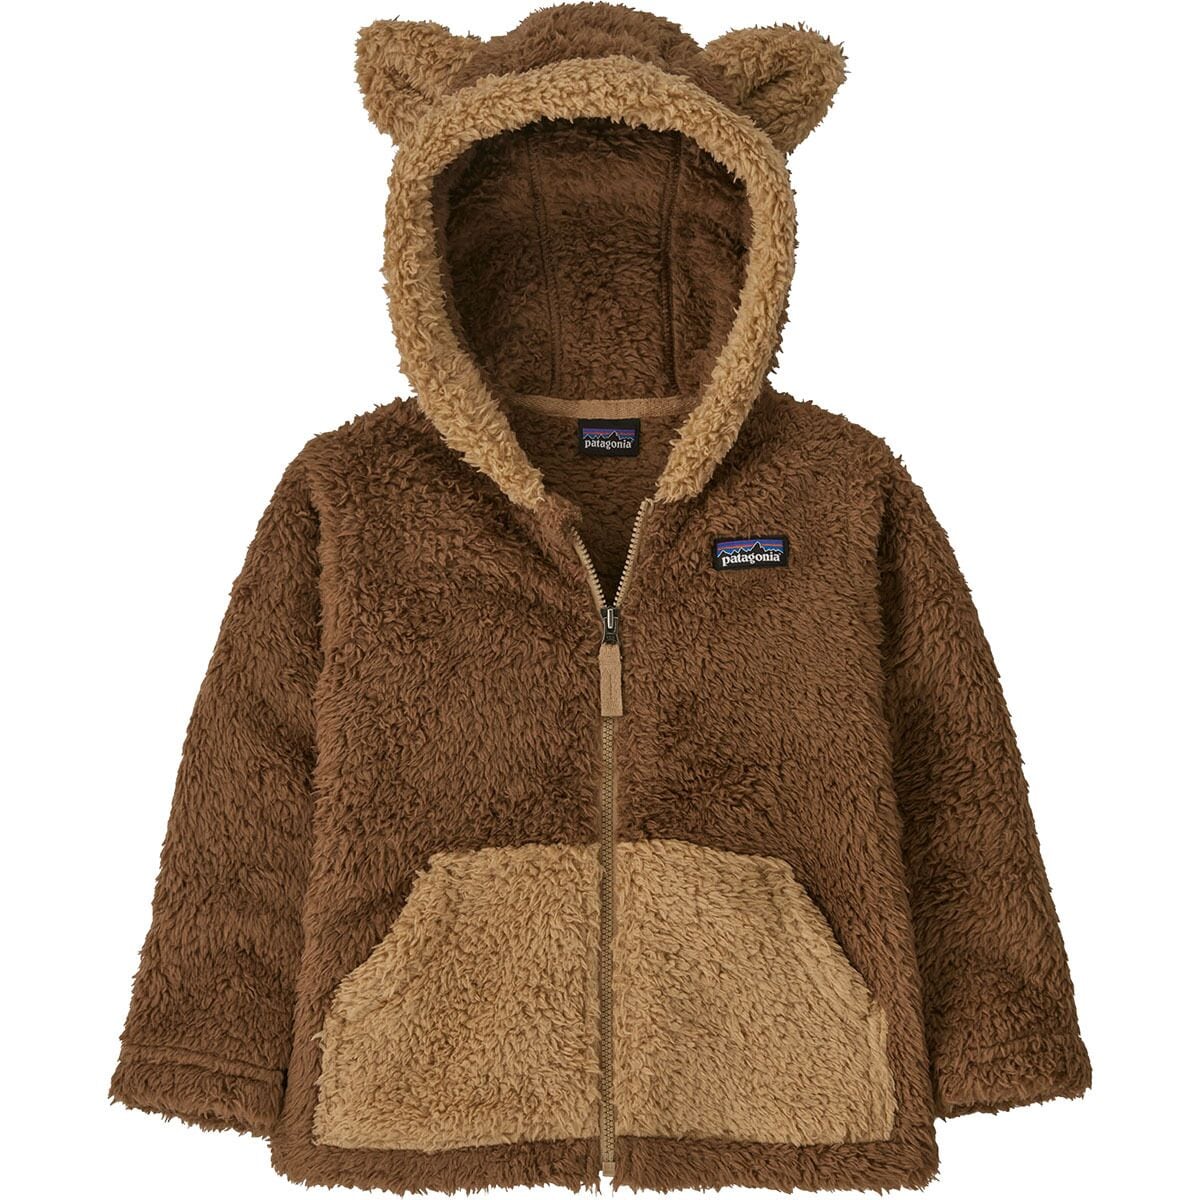 Patagonia Furry Friends Fleece Hooded Jacket - Toddlers